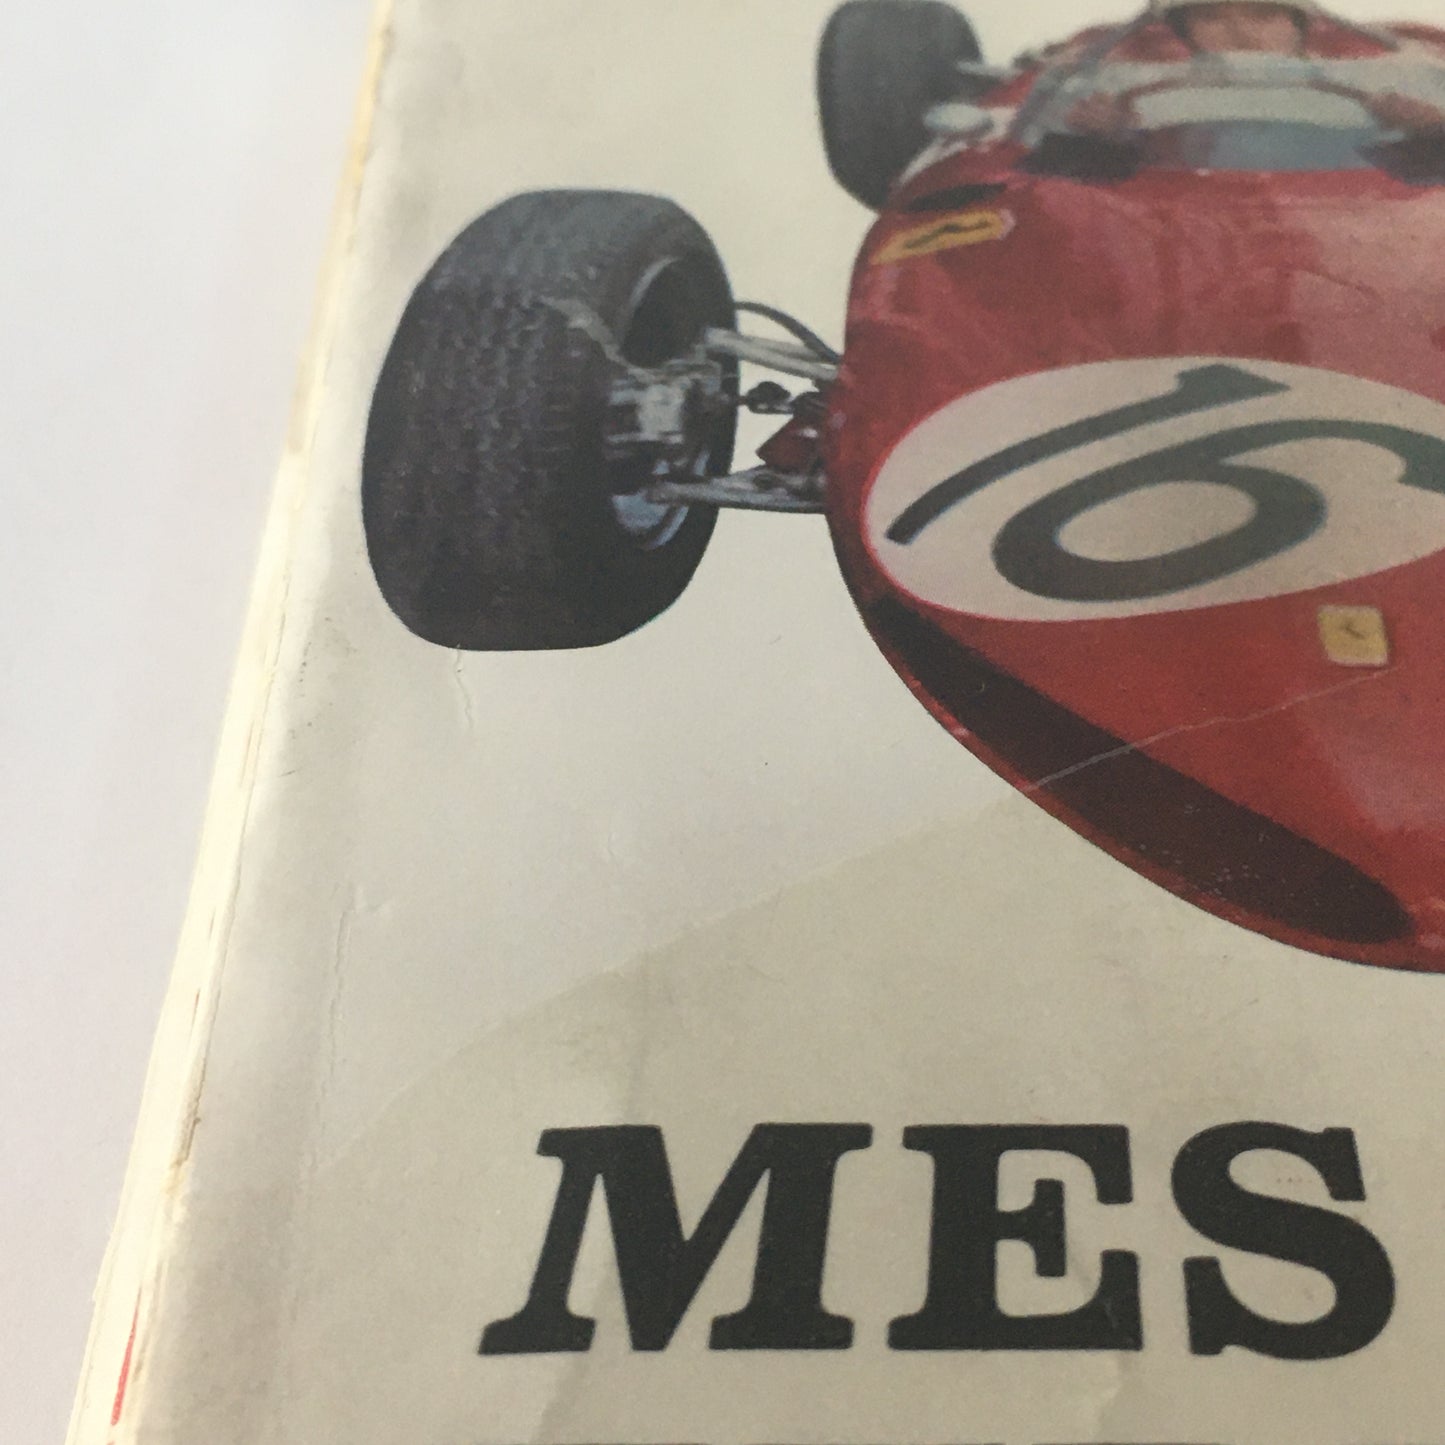 Ferrari, Libro Enzo Ferrari Mes Joies Terrible, Marabout Service Edizione del 1964 scritta da Robert Laffont